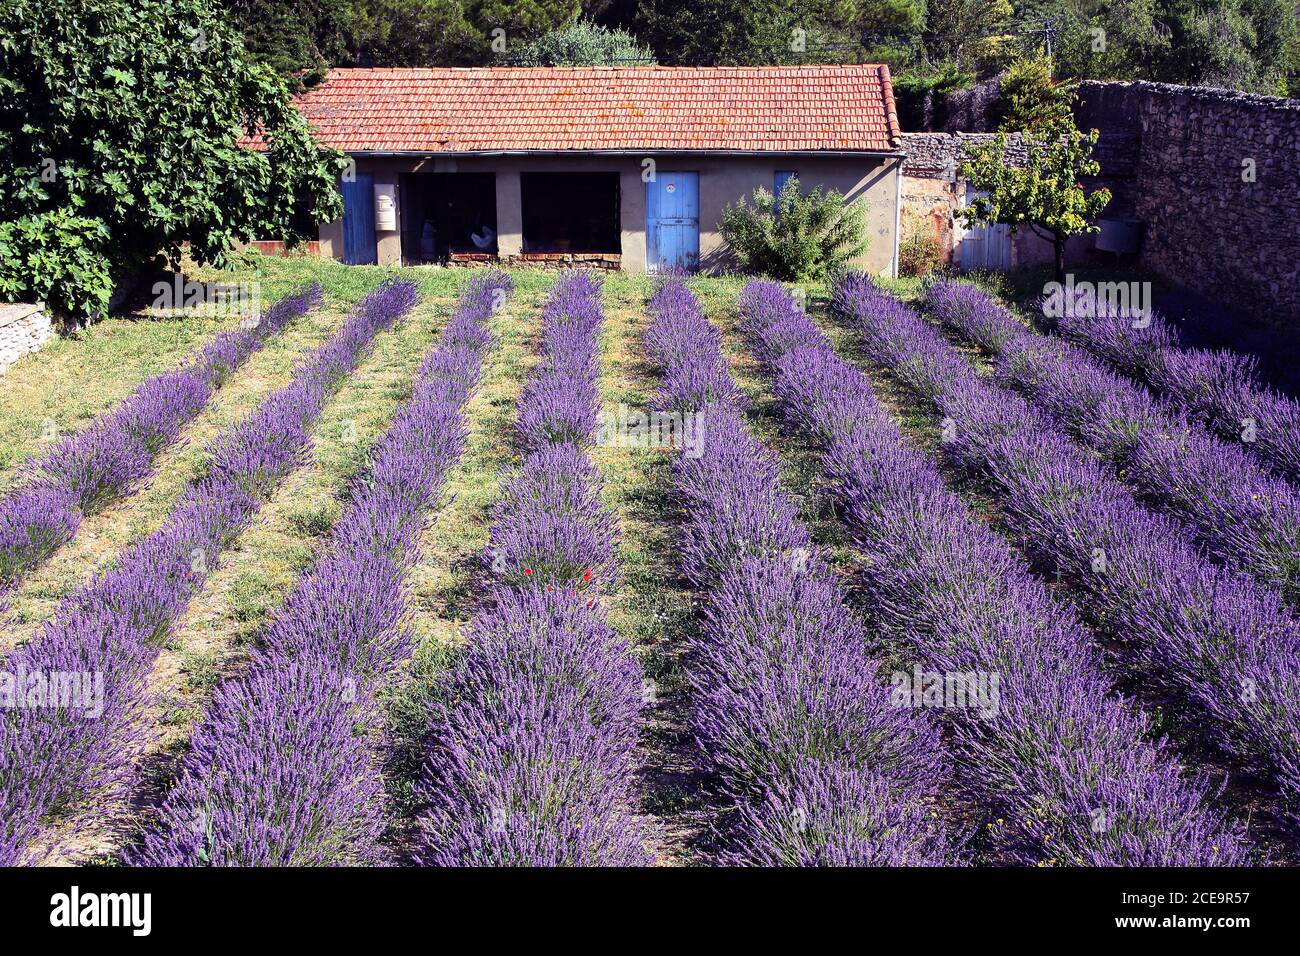 Monastery Garden, St-Rémy-de-Provence, France Stock Photo